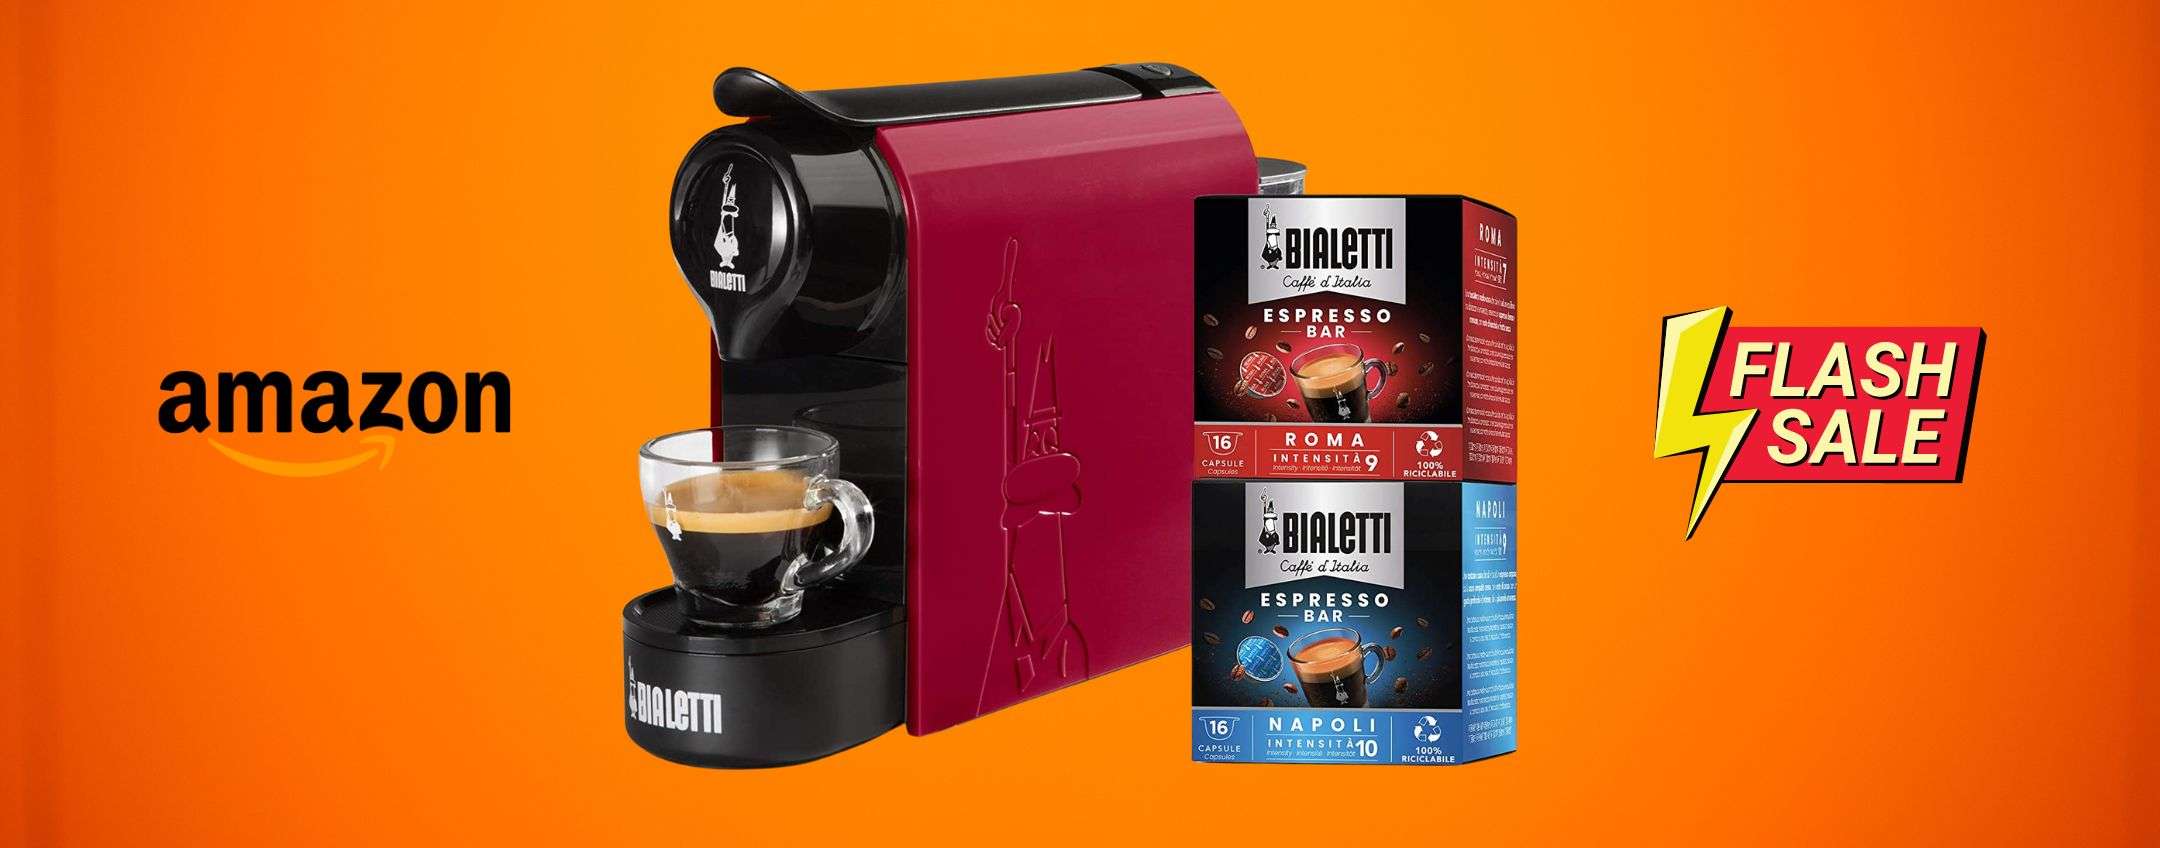 Macchina caffè Bialetti: l'espresso a casa tua a meno di 50€ (sconto)